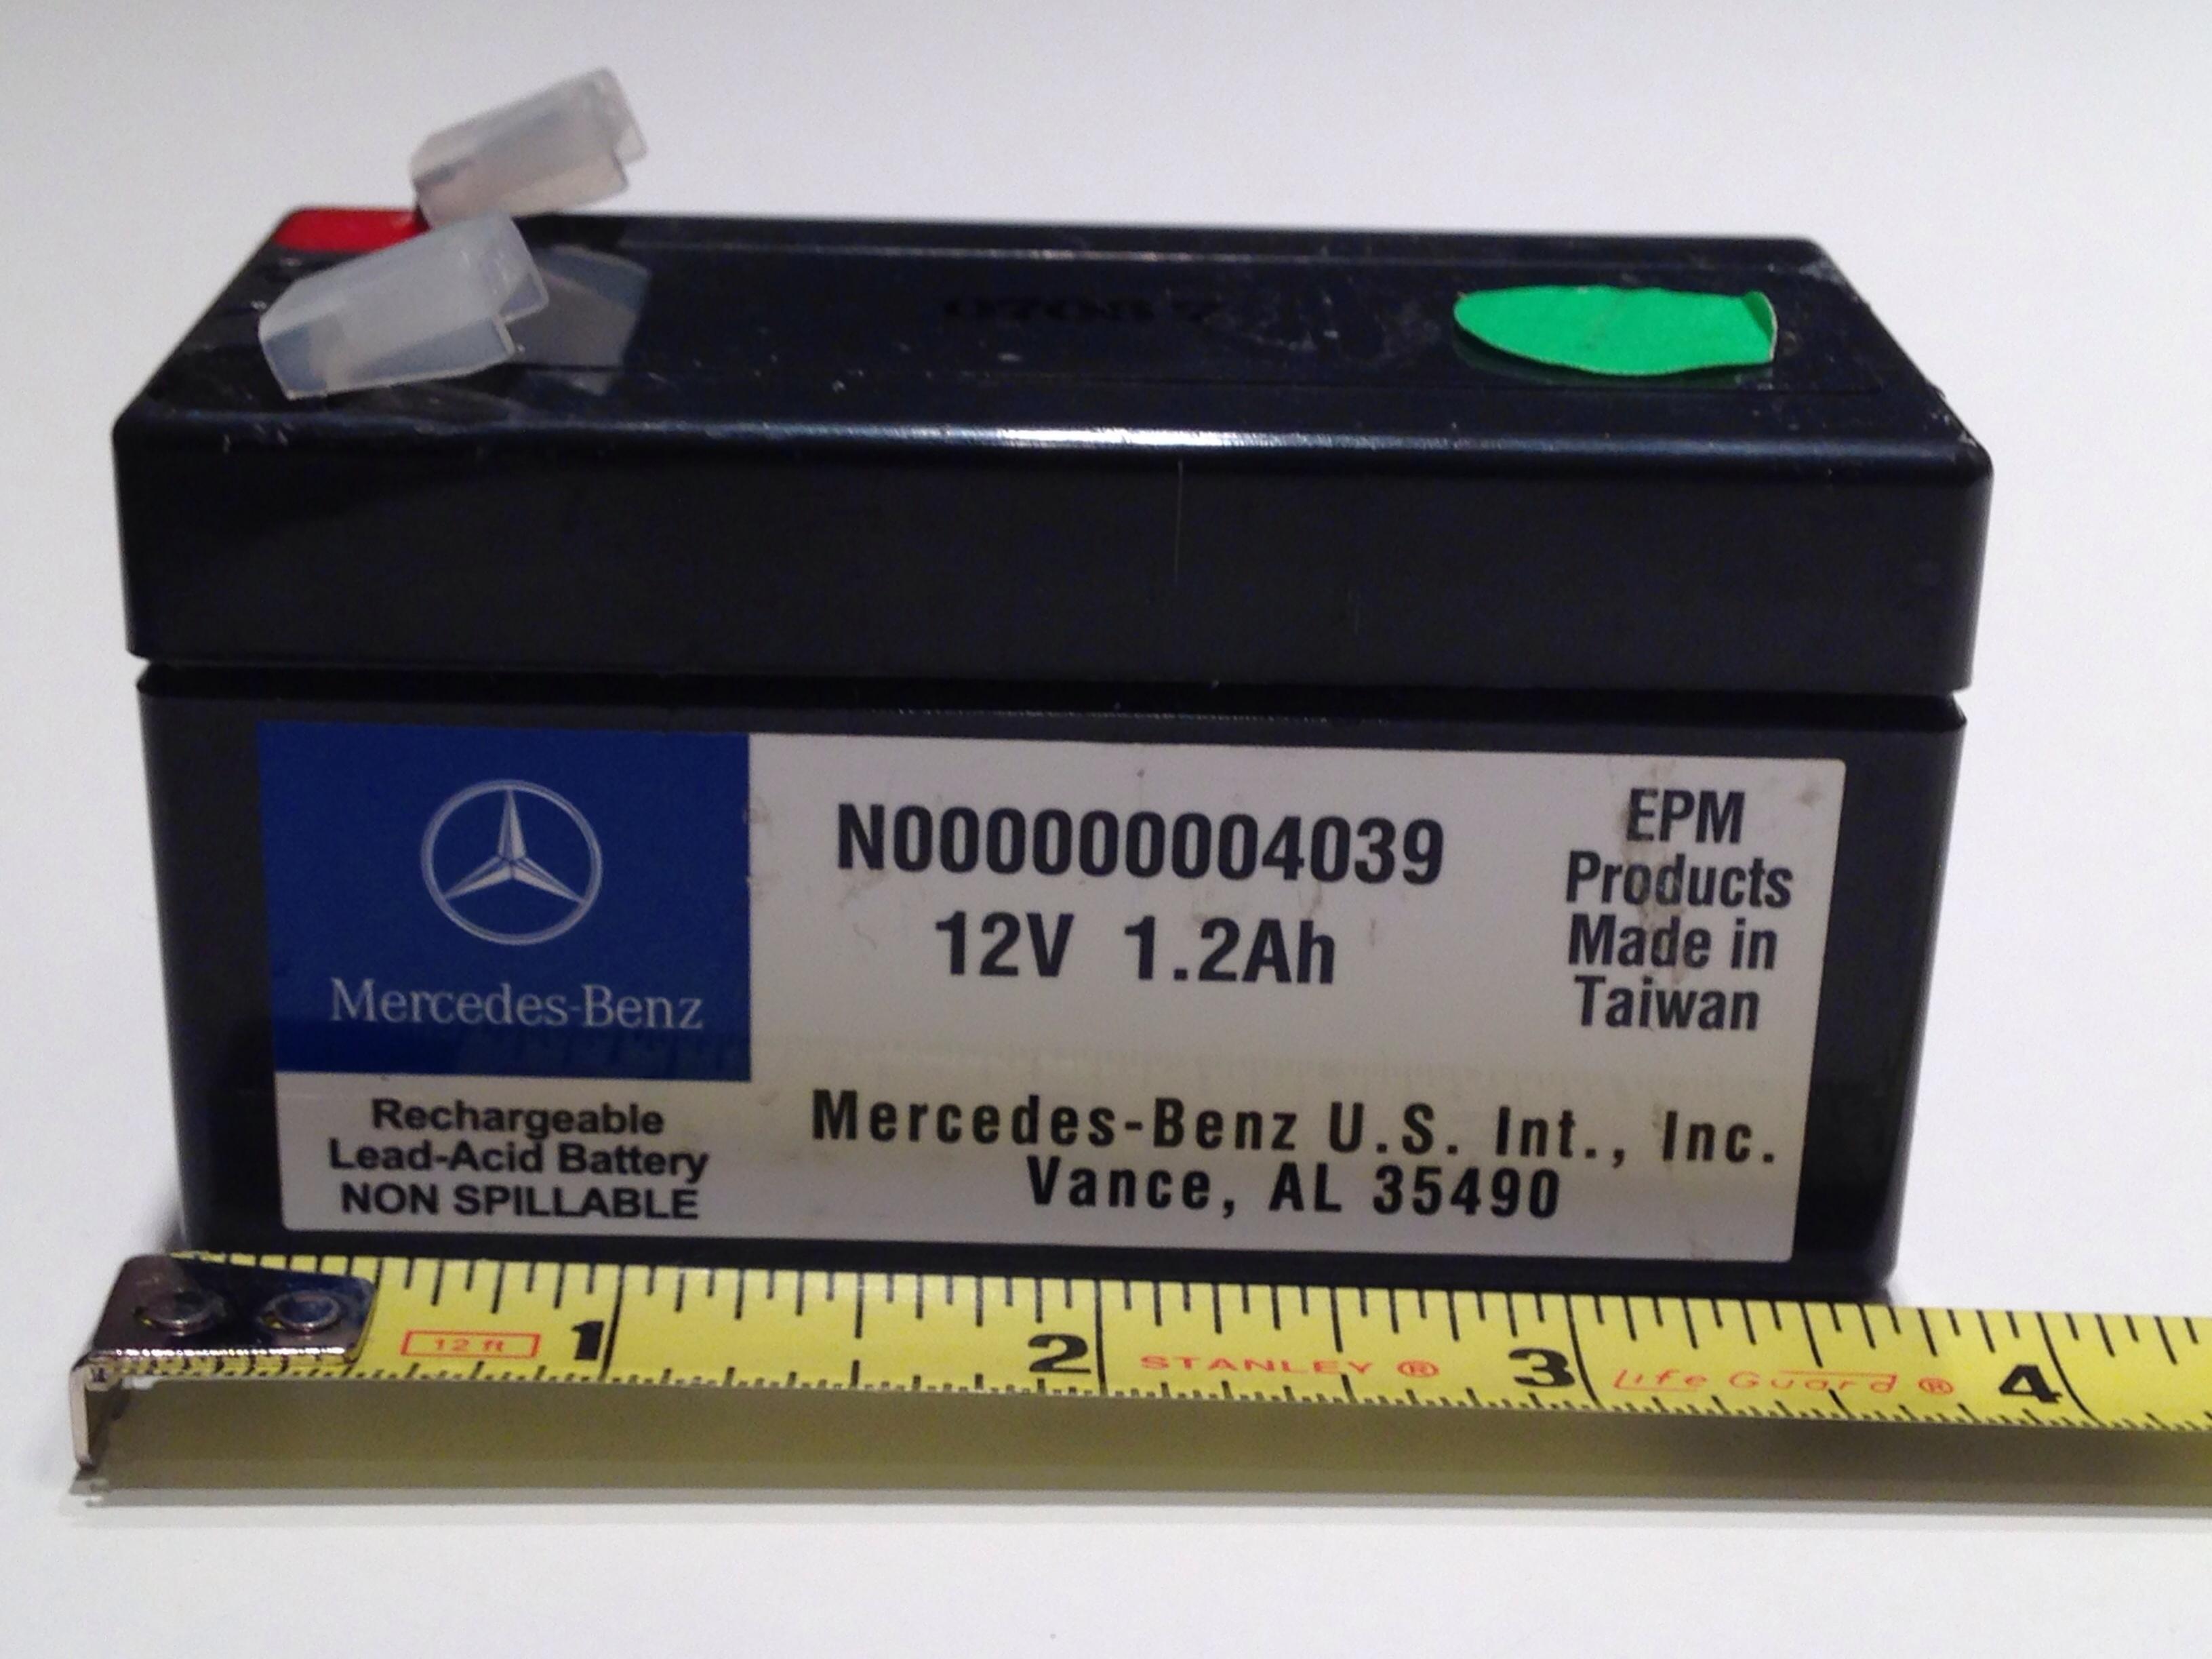 2009 ML 350 Battery Indicator? - MBWorld.org Forums